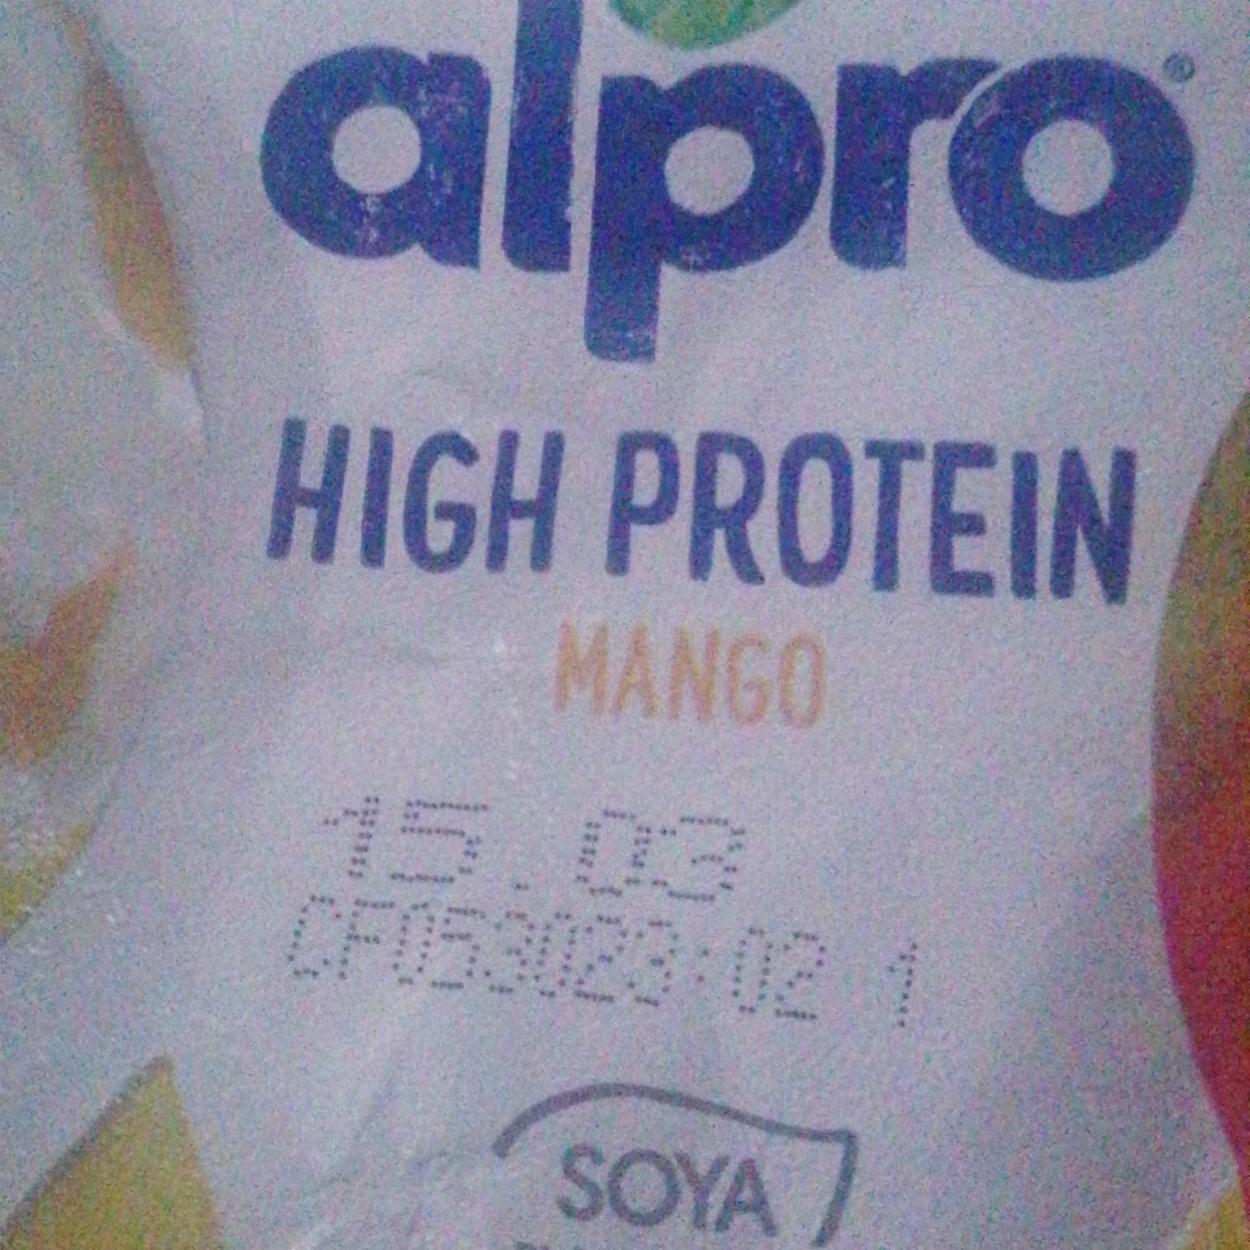 Fotografie - high protein mango Alpro